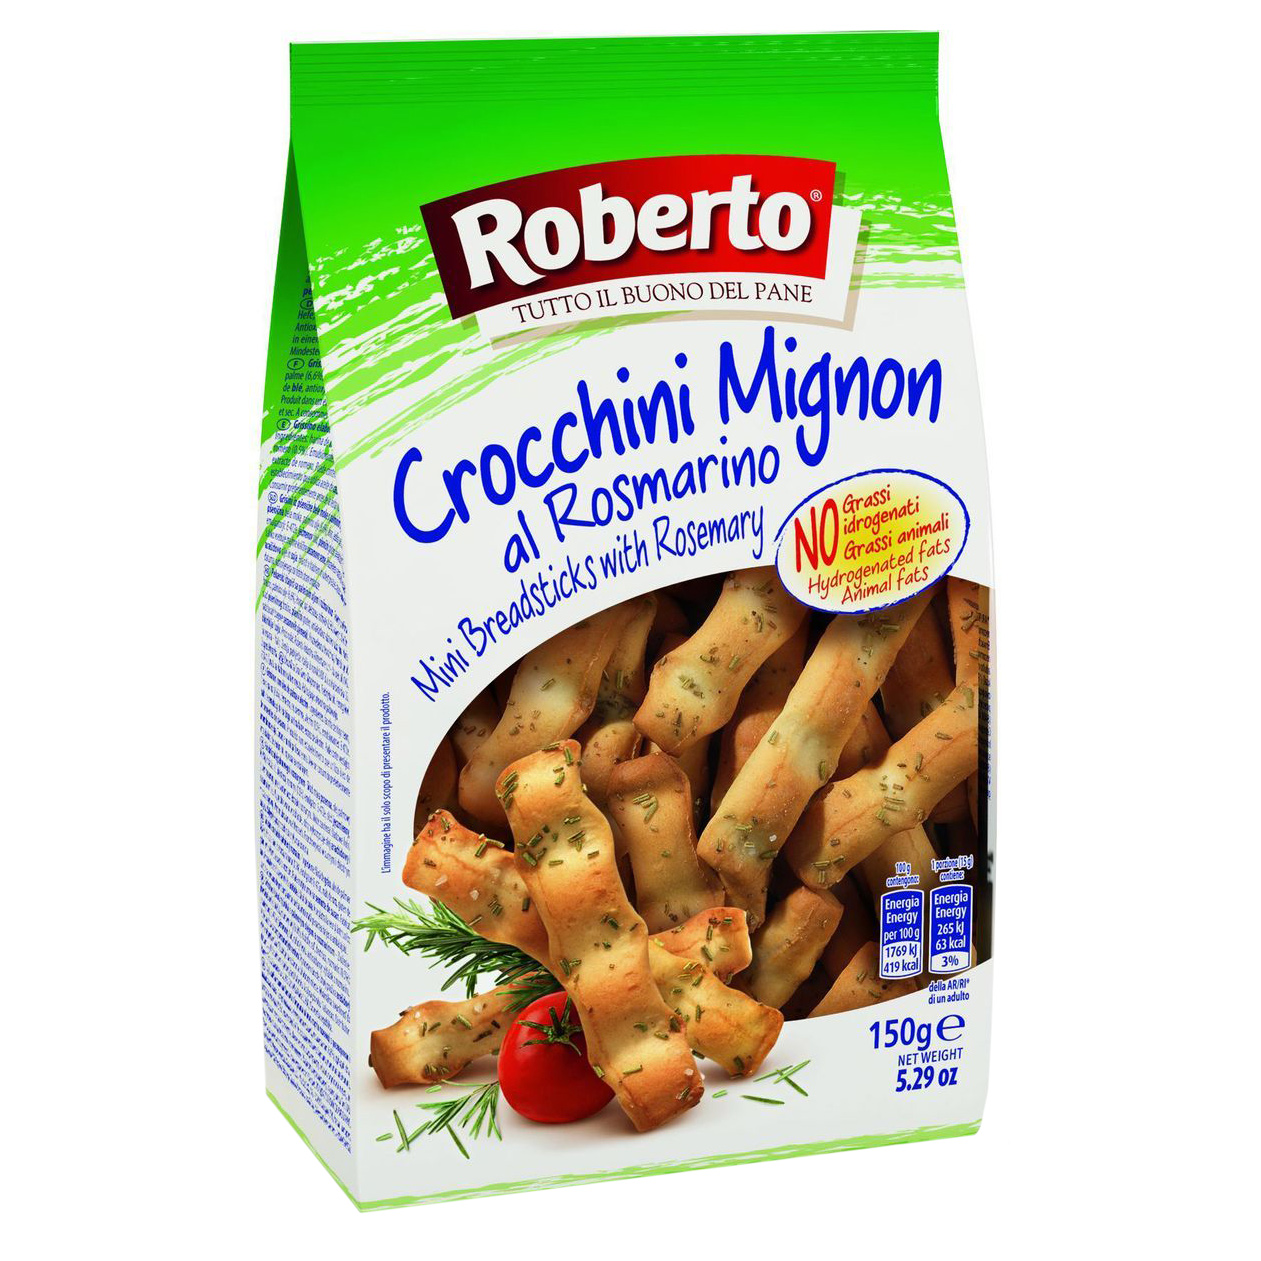 Хлебные палочки Roberto Гриссини Миньон с розмарином 150 г хлебные палочки roberto grissini crocchini с розмарином 250 г